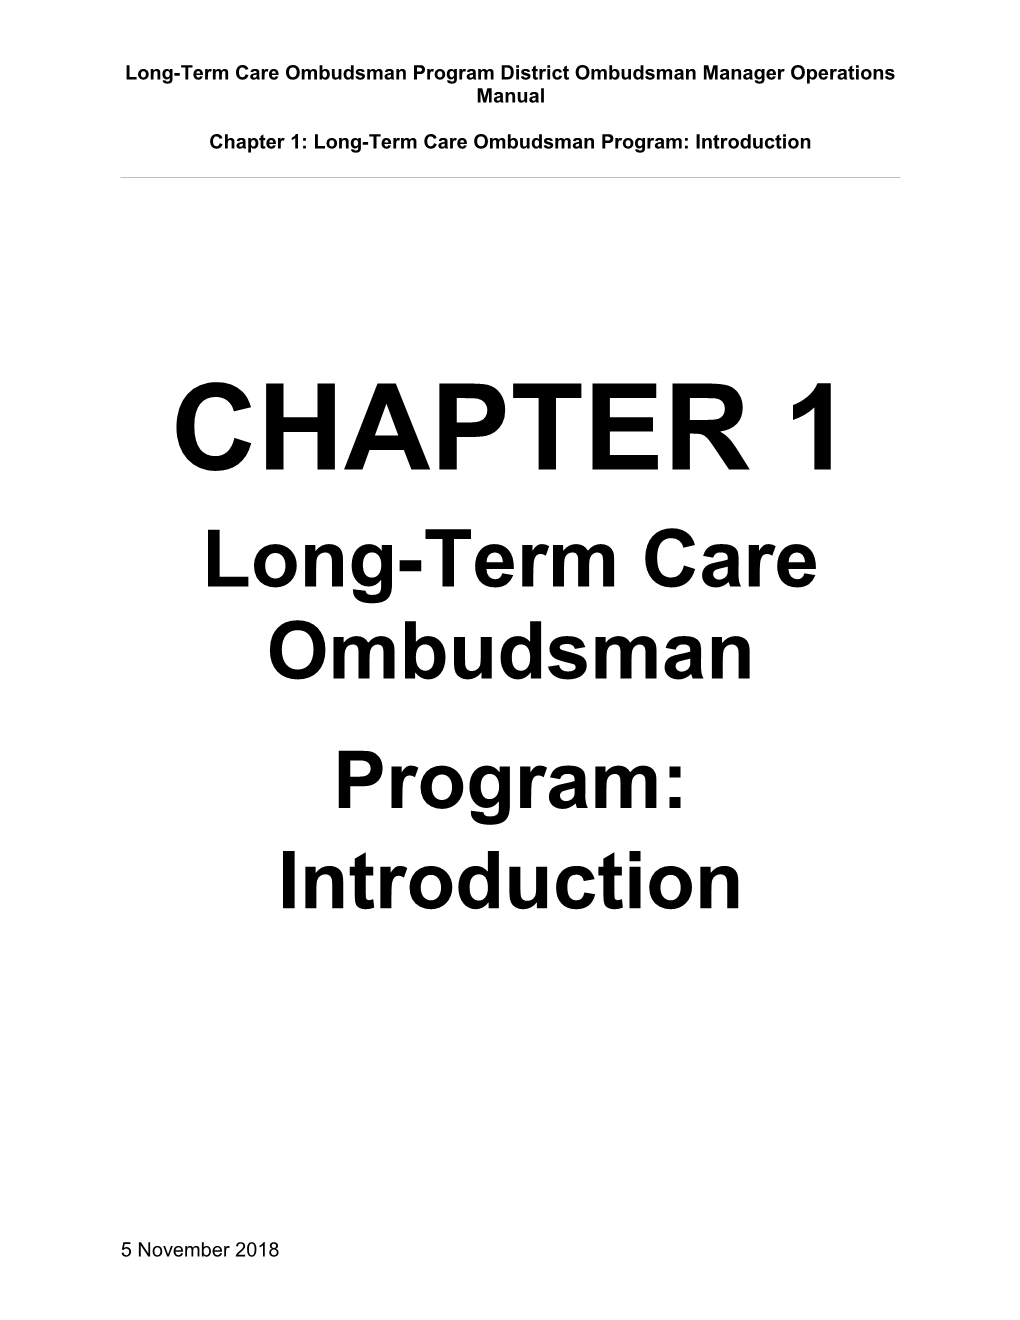 Long-Term Care Ombudsman Program District Ombudsman Manager Operations Manual